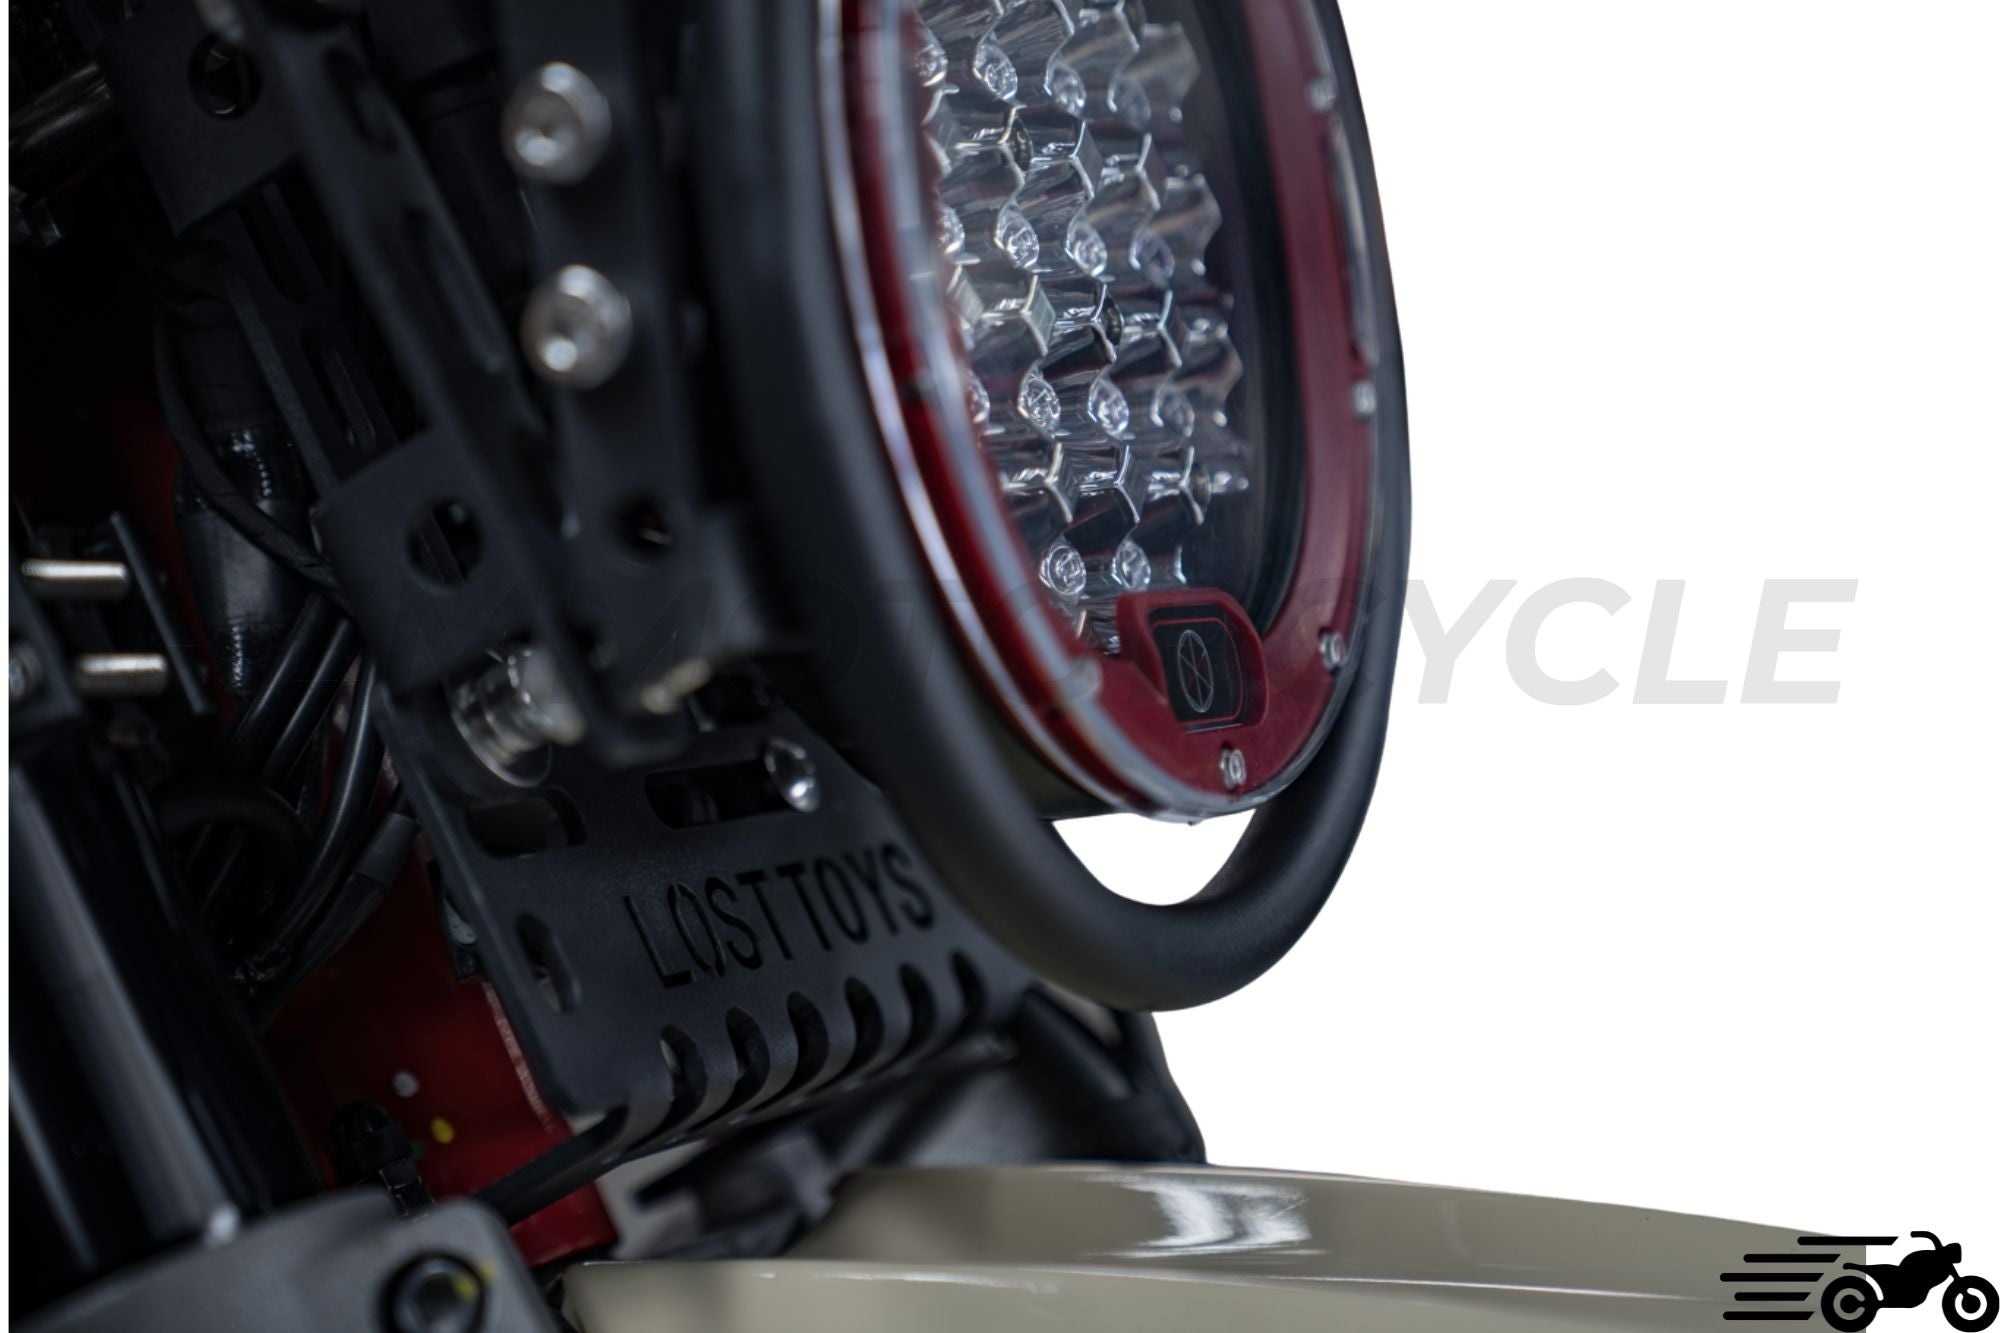 Headlight with Fork Head Ducati Scrambler x Desert Sled AVENTURE